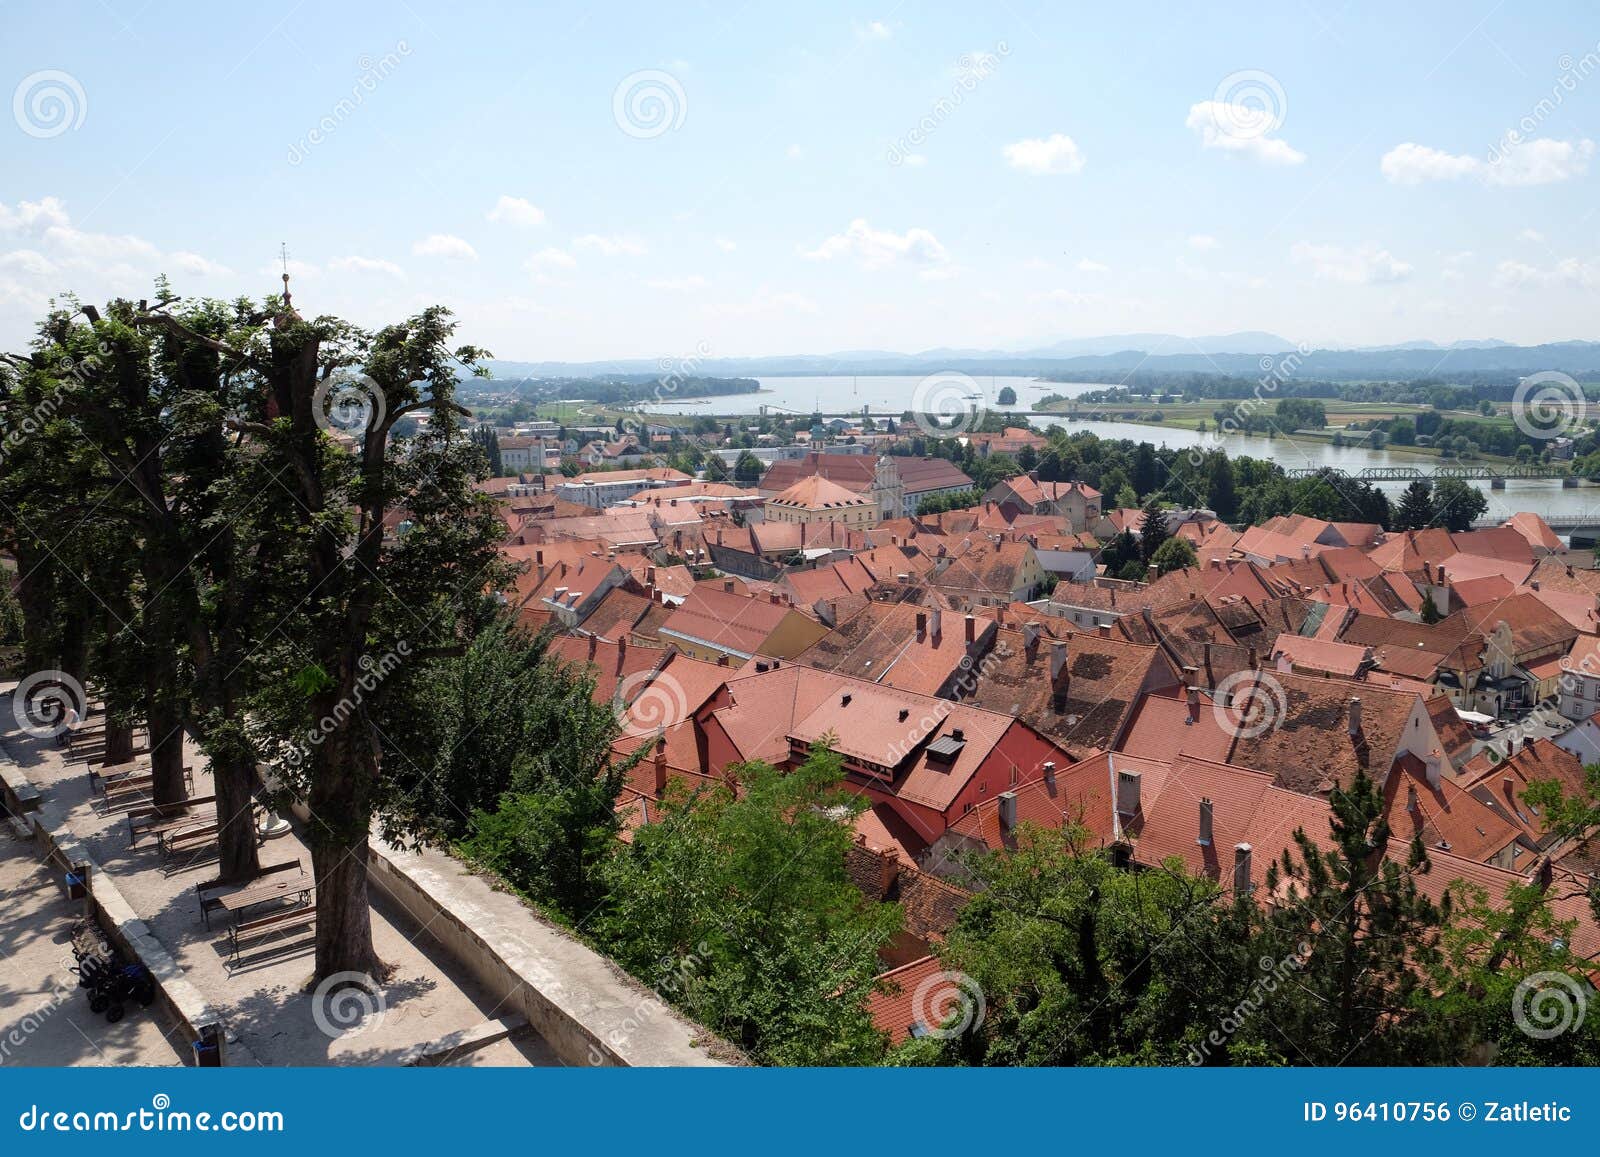 ptuj, town on the drava river banks, slovenia